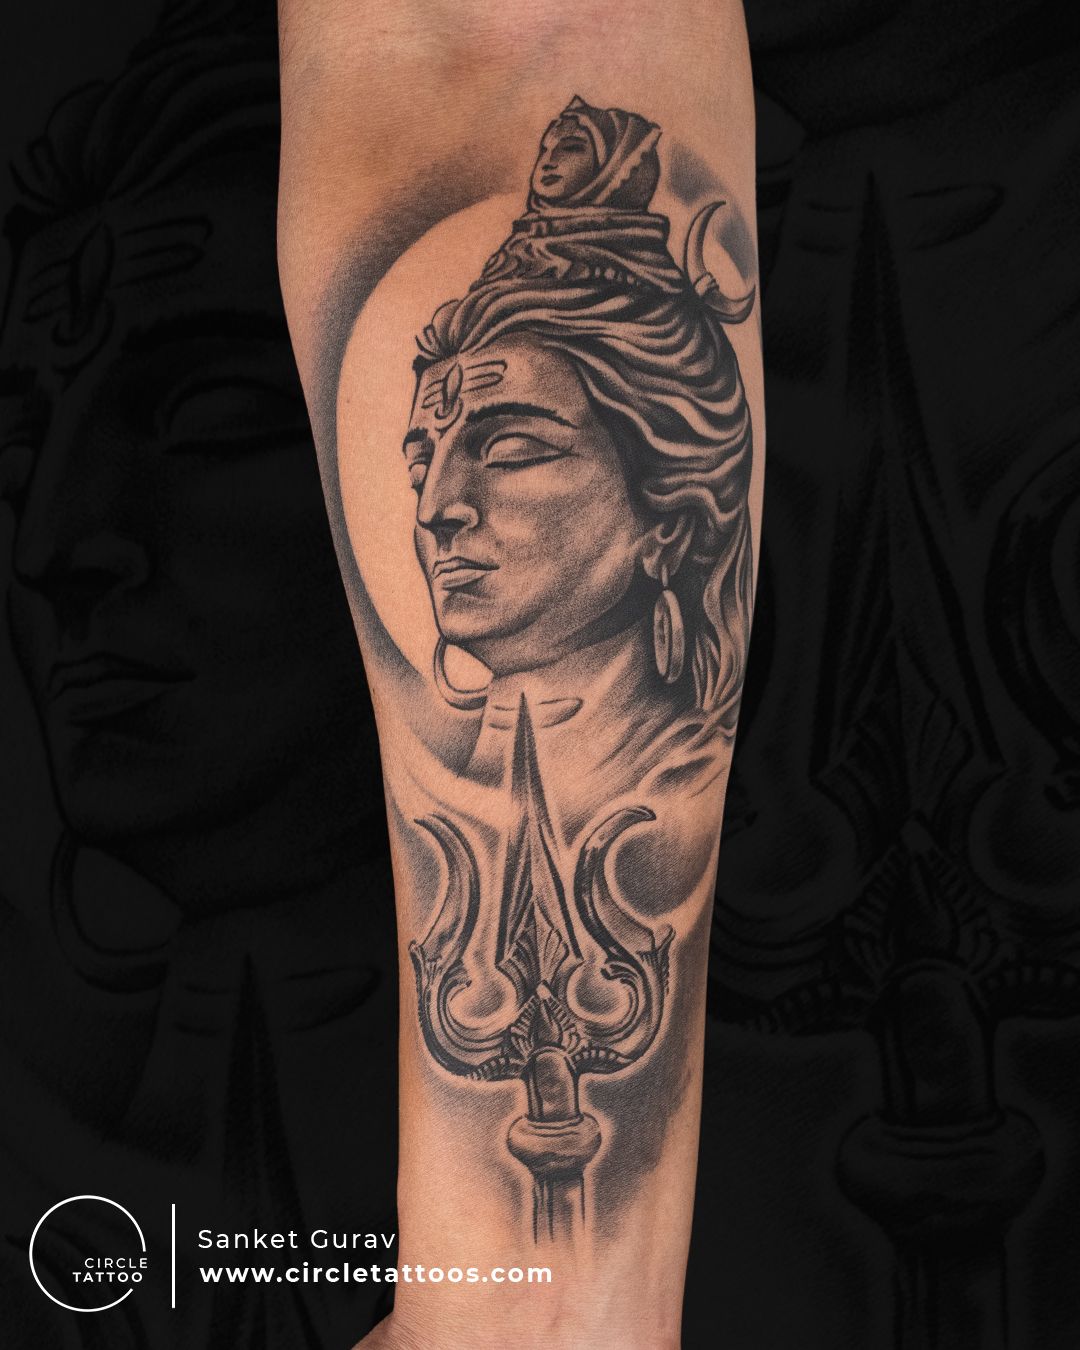 Shiva Tattoo: The Destroyer of Darkness | Tattoo Ink Master